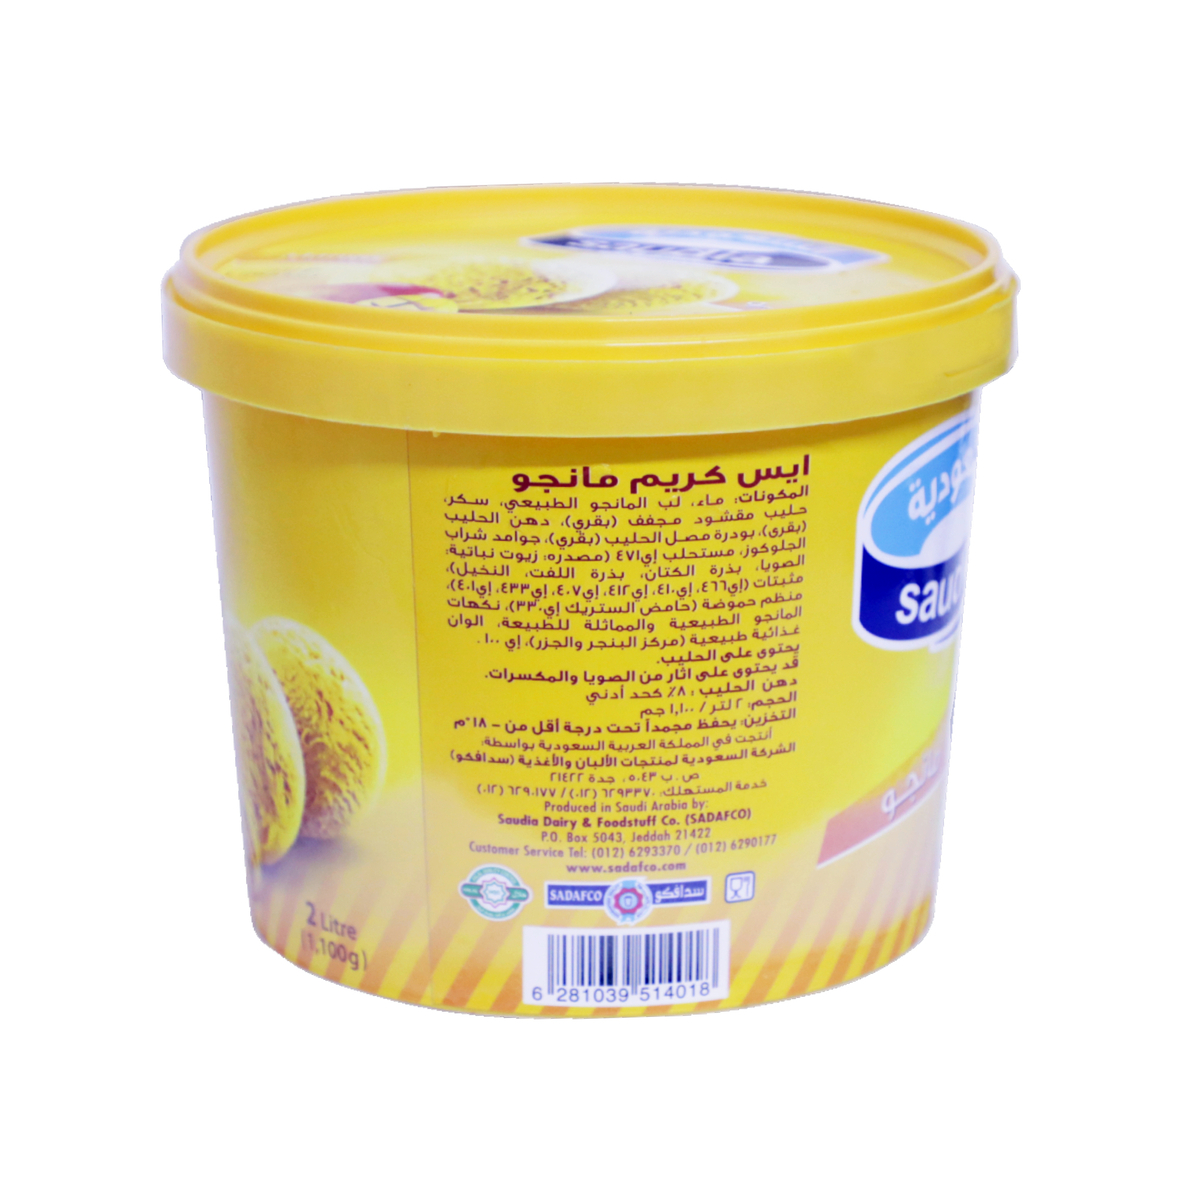 Saudia Ice Cream Mango 2 Litre